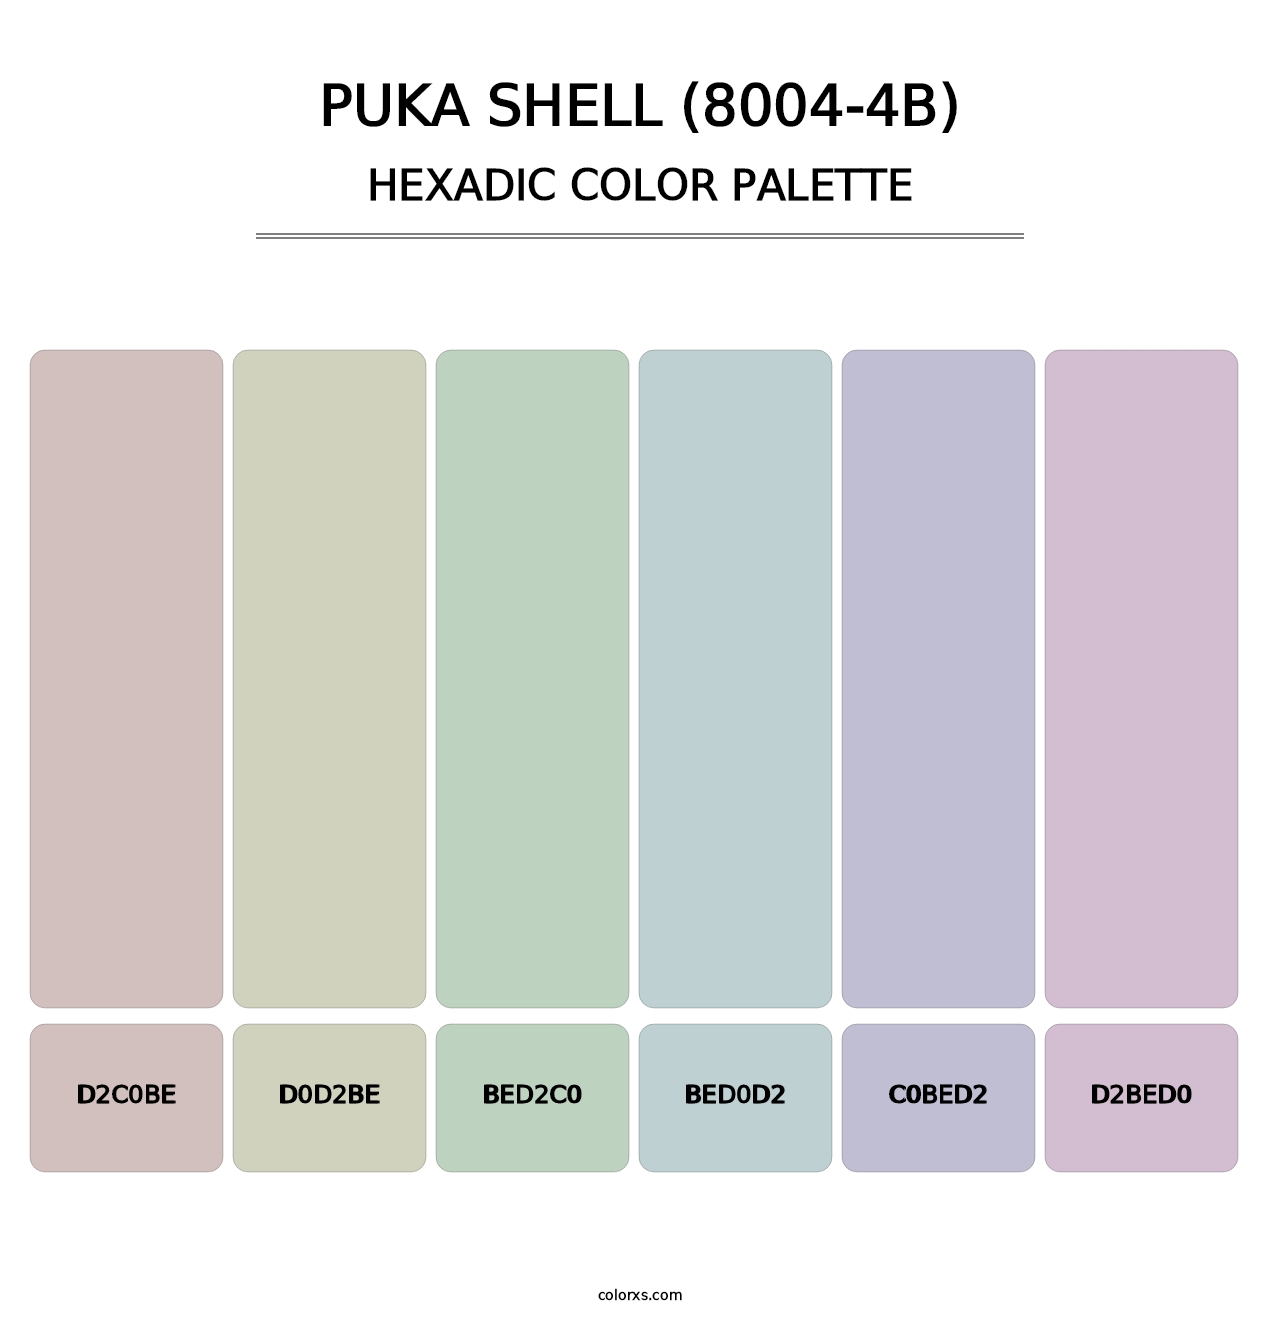 Puka Shell (8004-4B) - Hexadic Color Palette